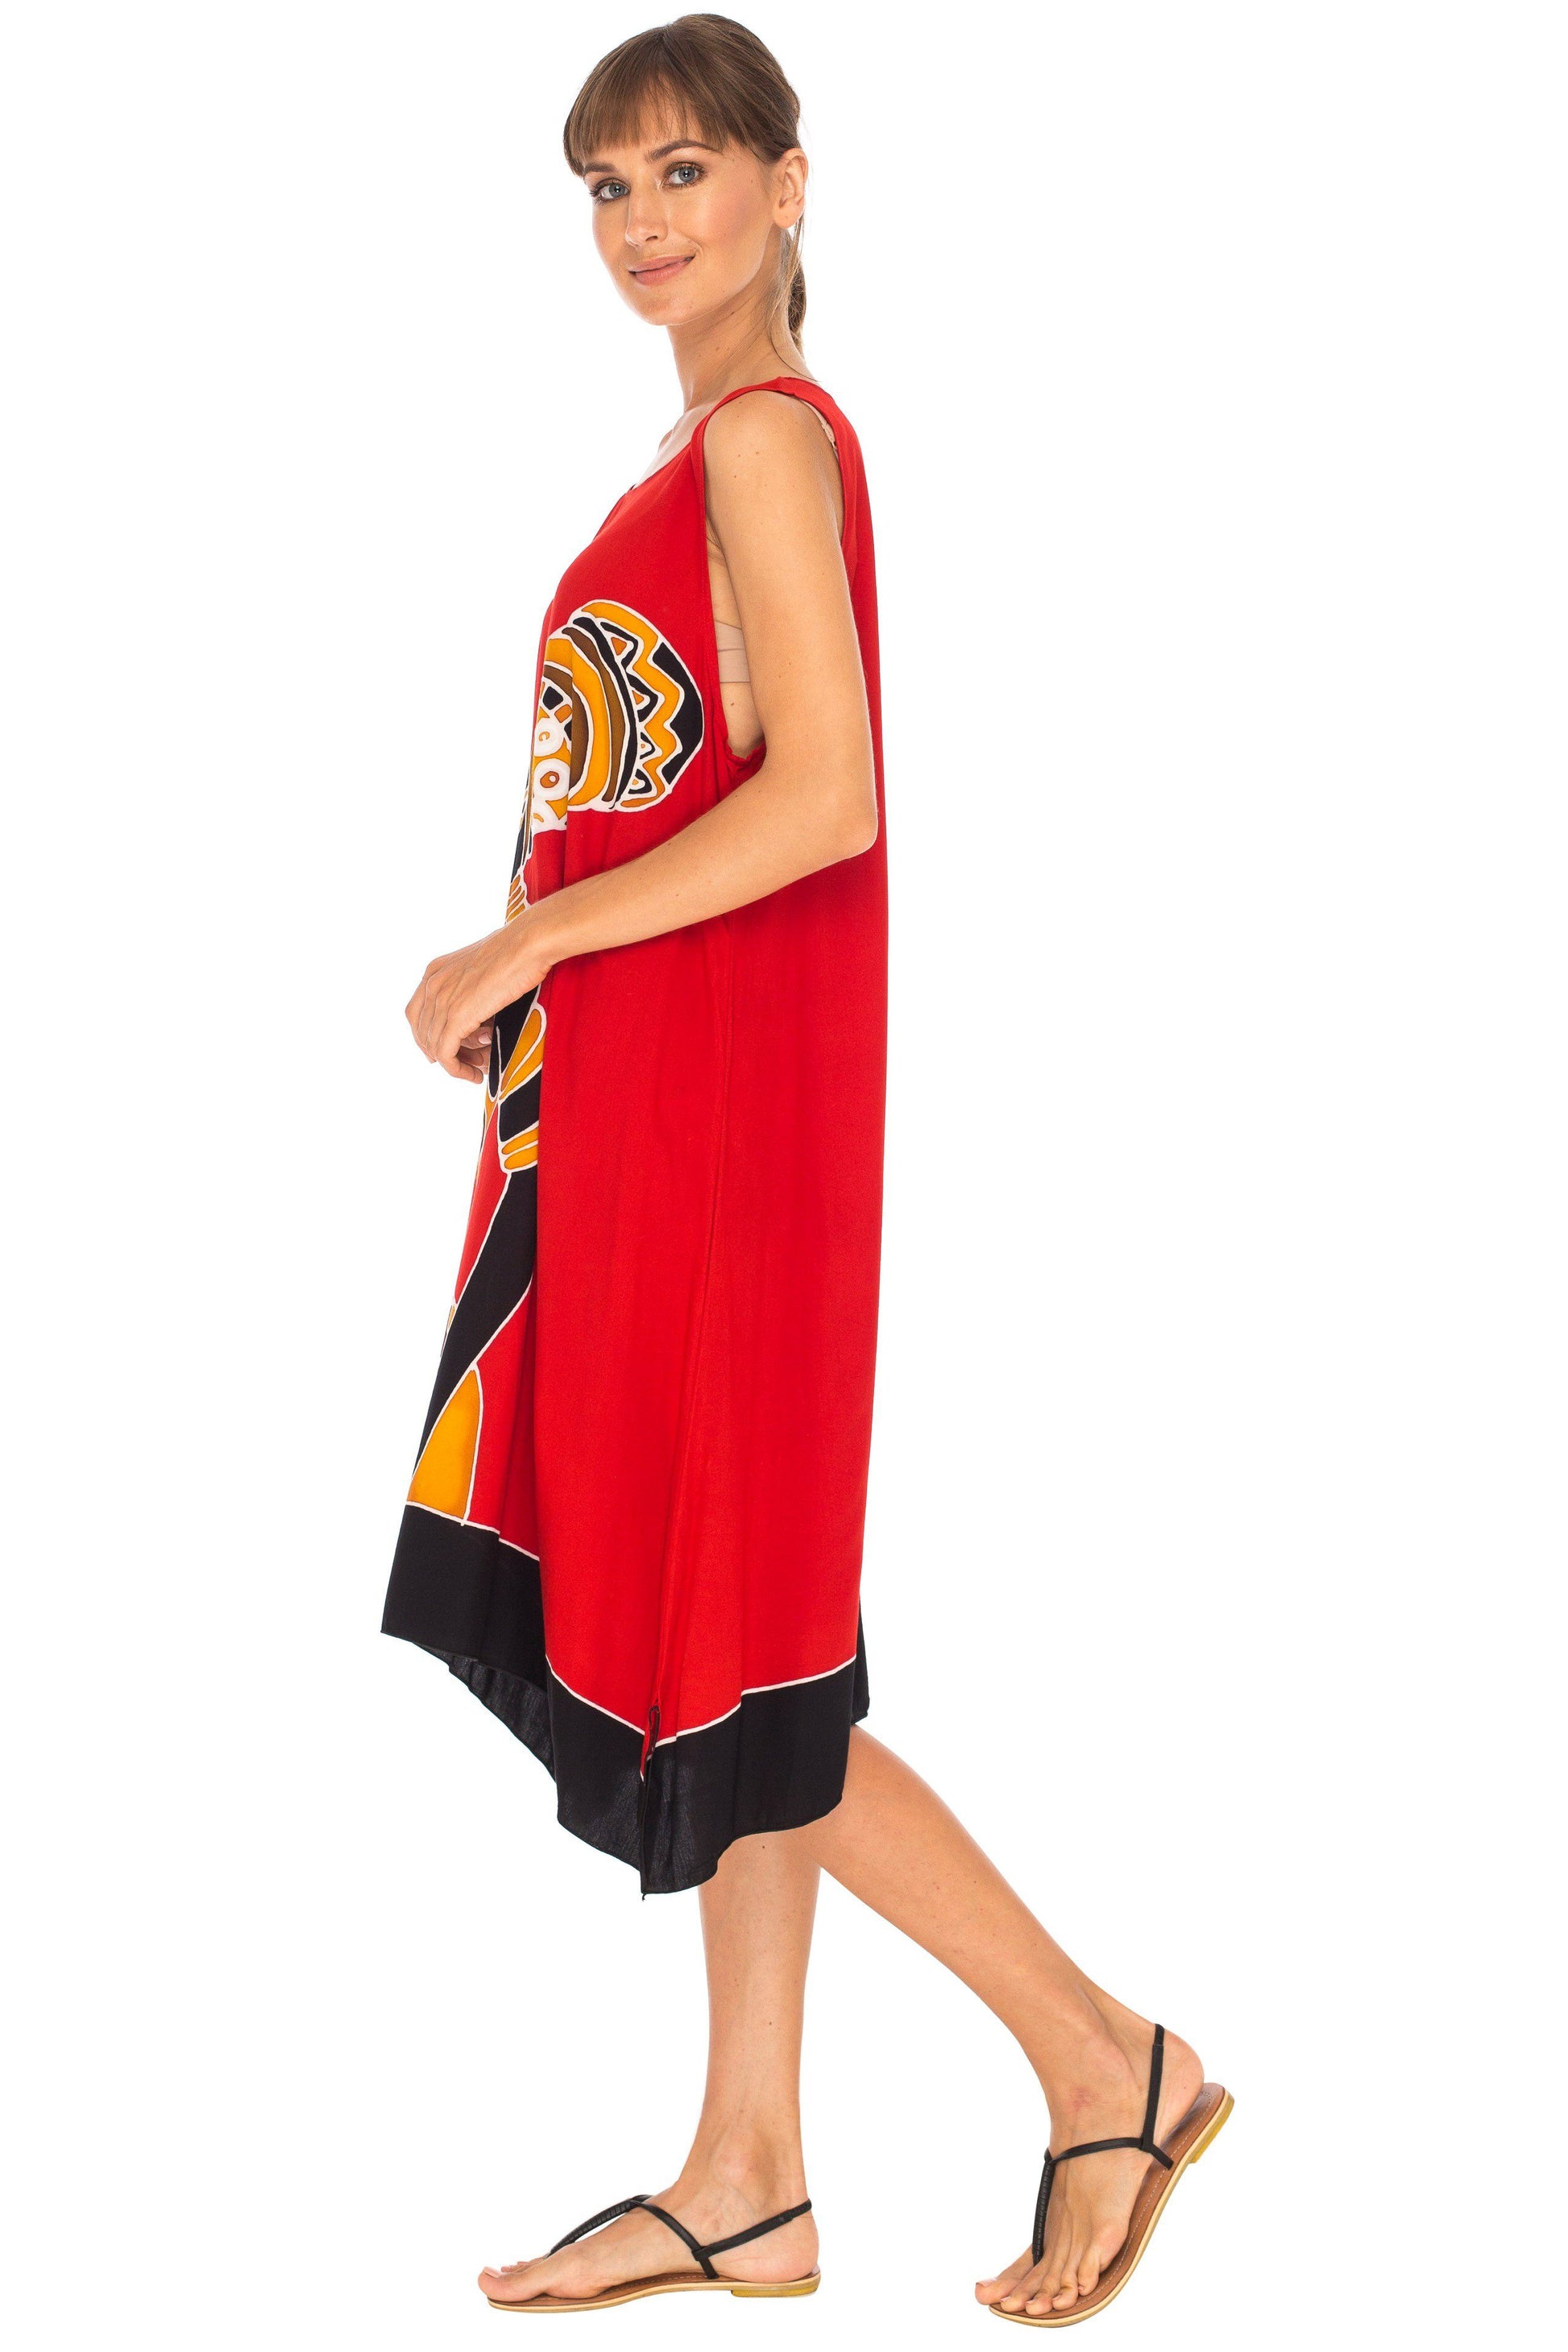 Hand Painted Tribal Design Short sleeveless summer Dress Love-Shu-Shi-red